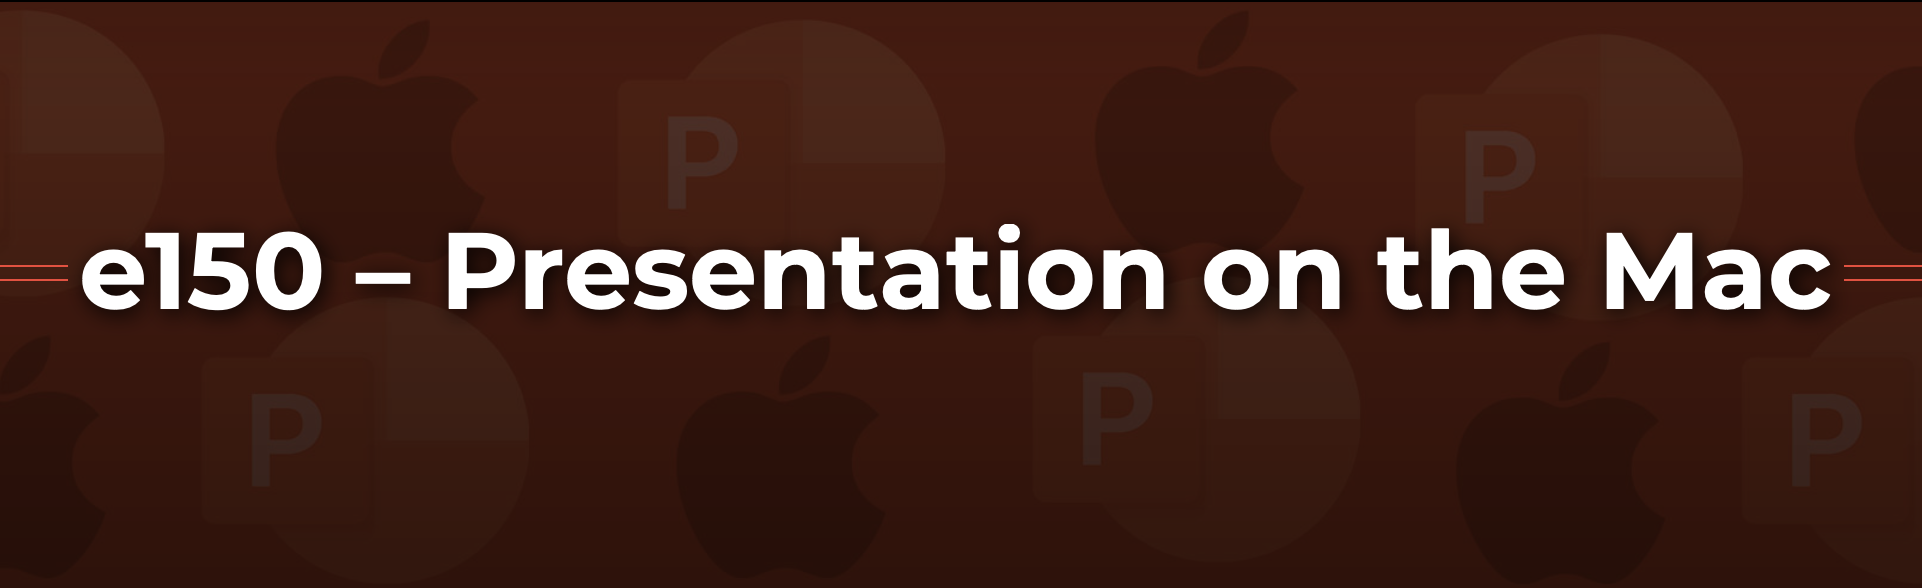 Presentation Podcast Mac PPT Art